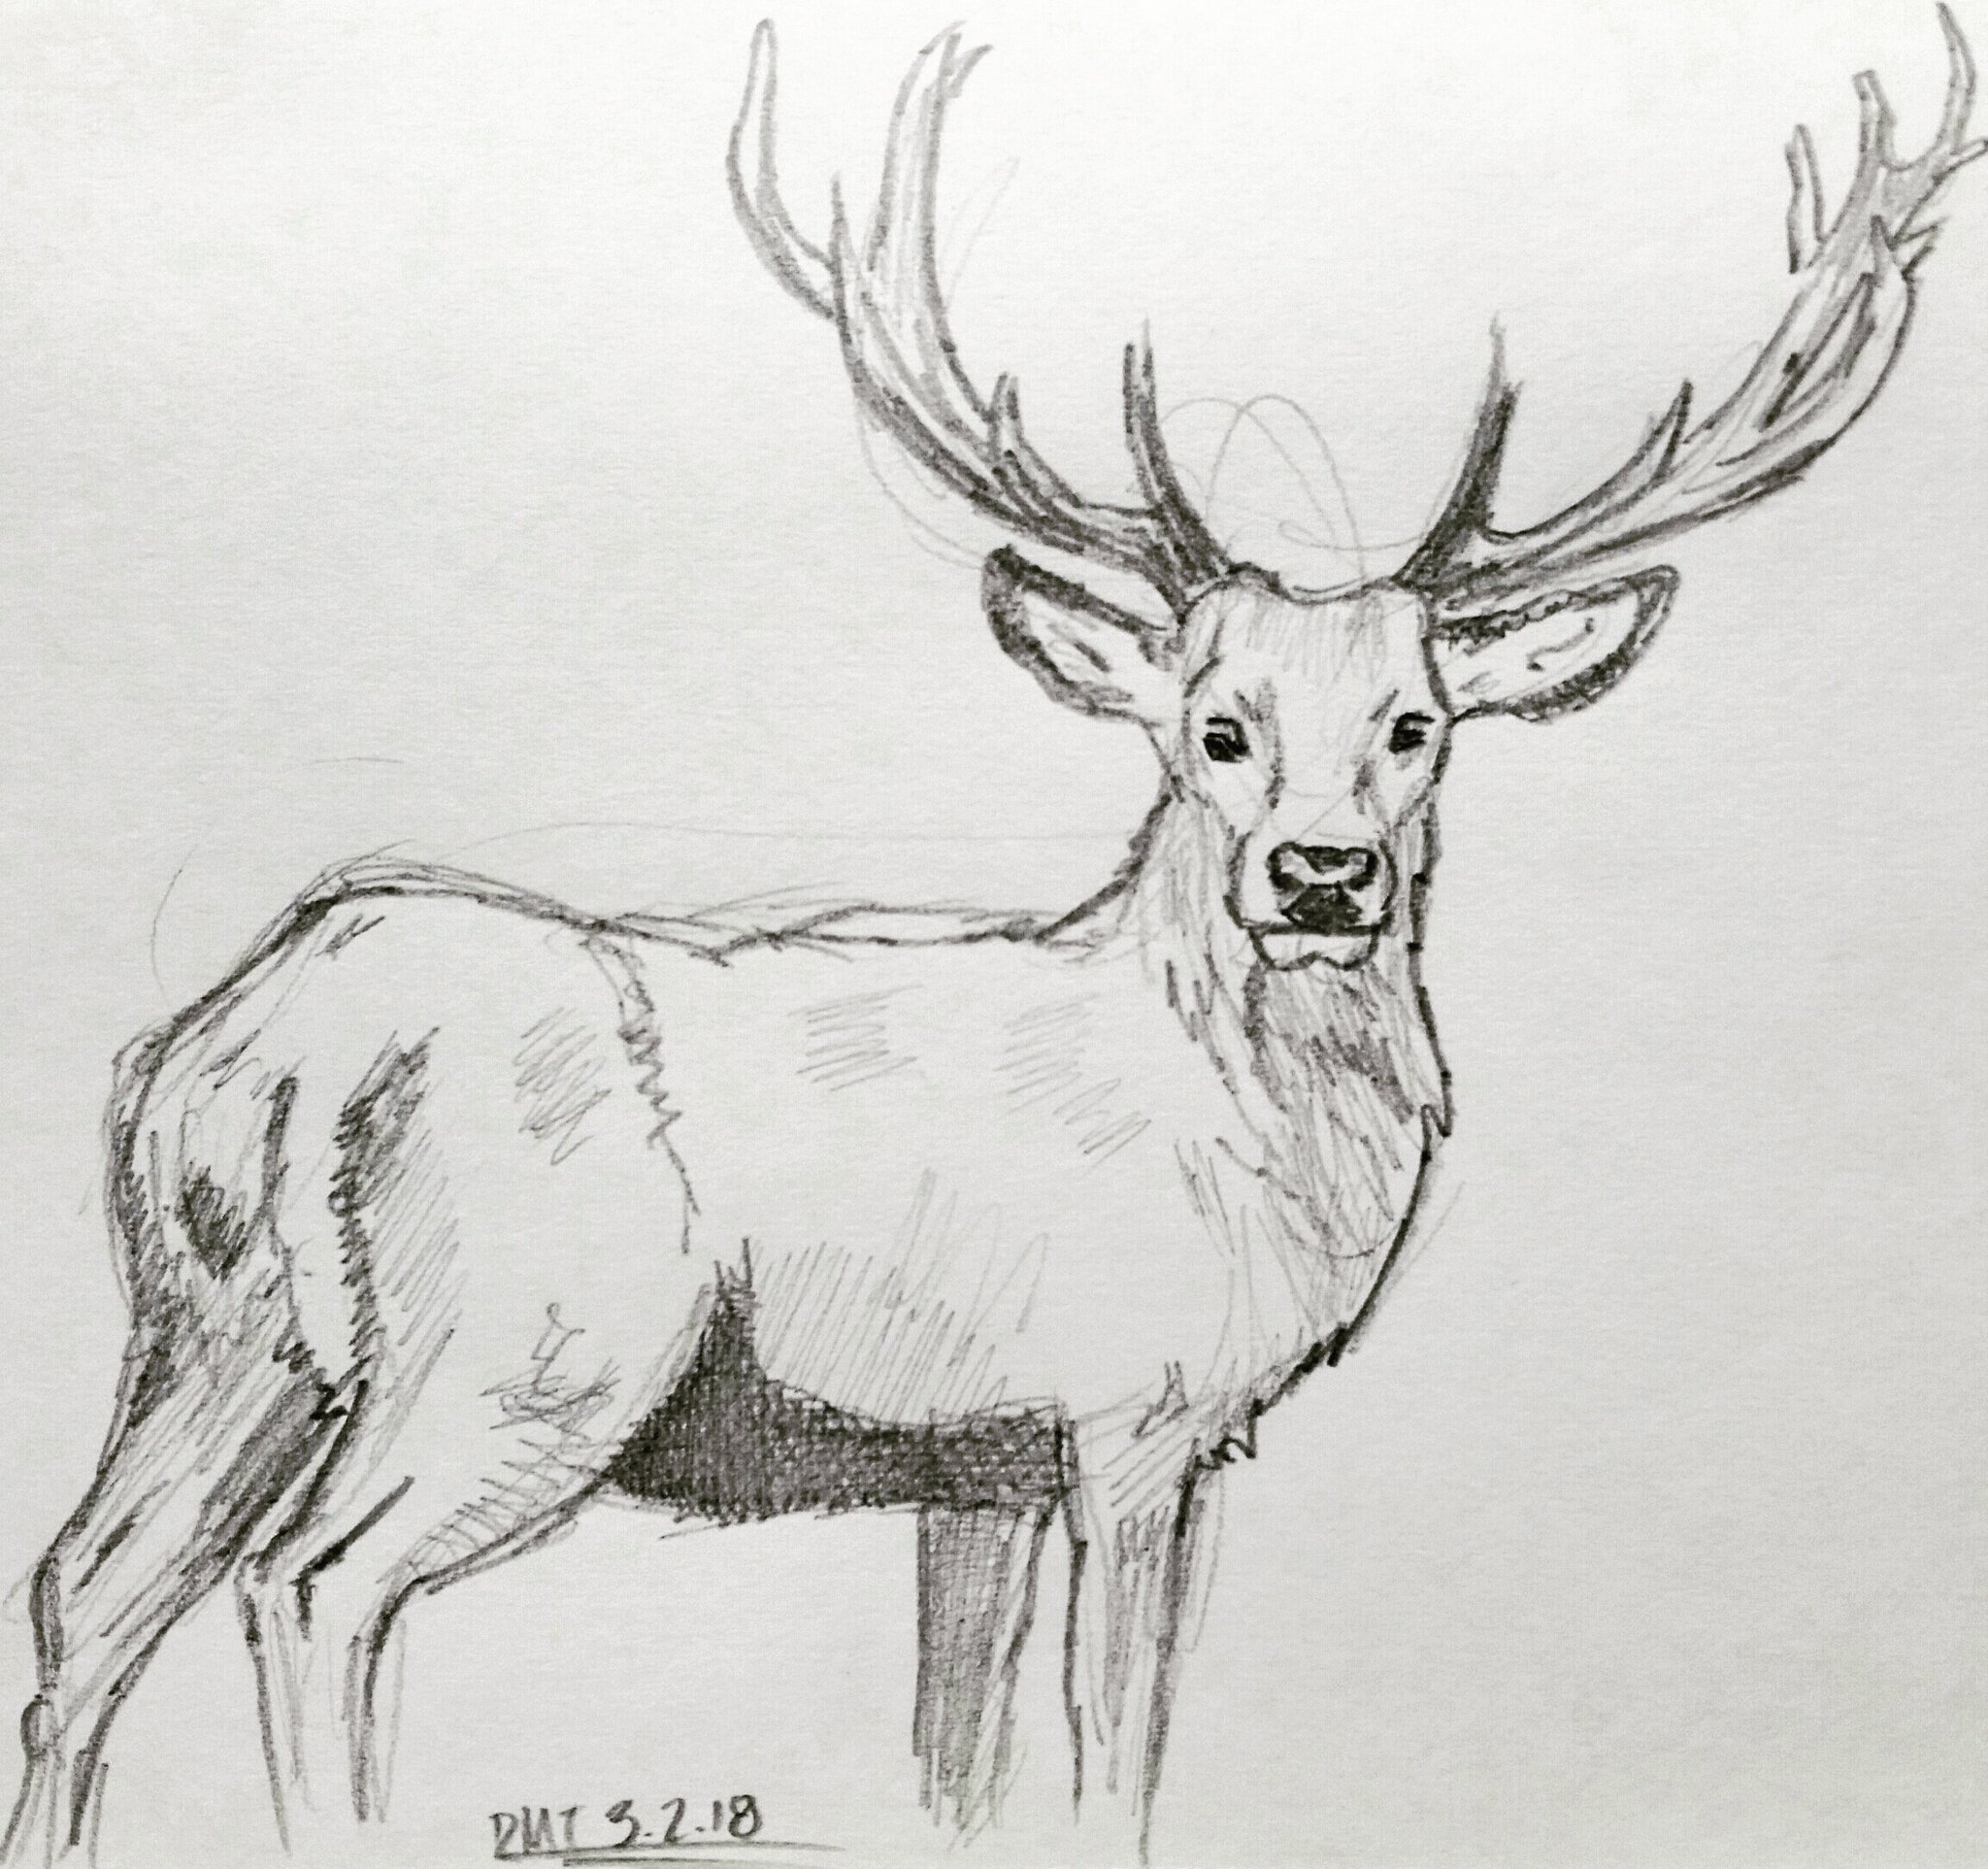 ArtStation - Deer - Pencil Sketch